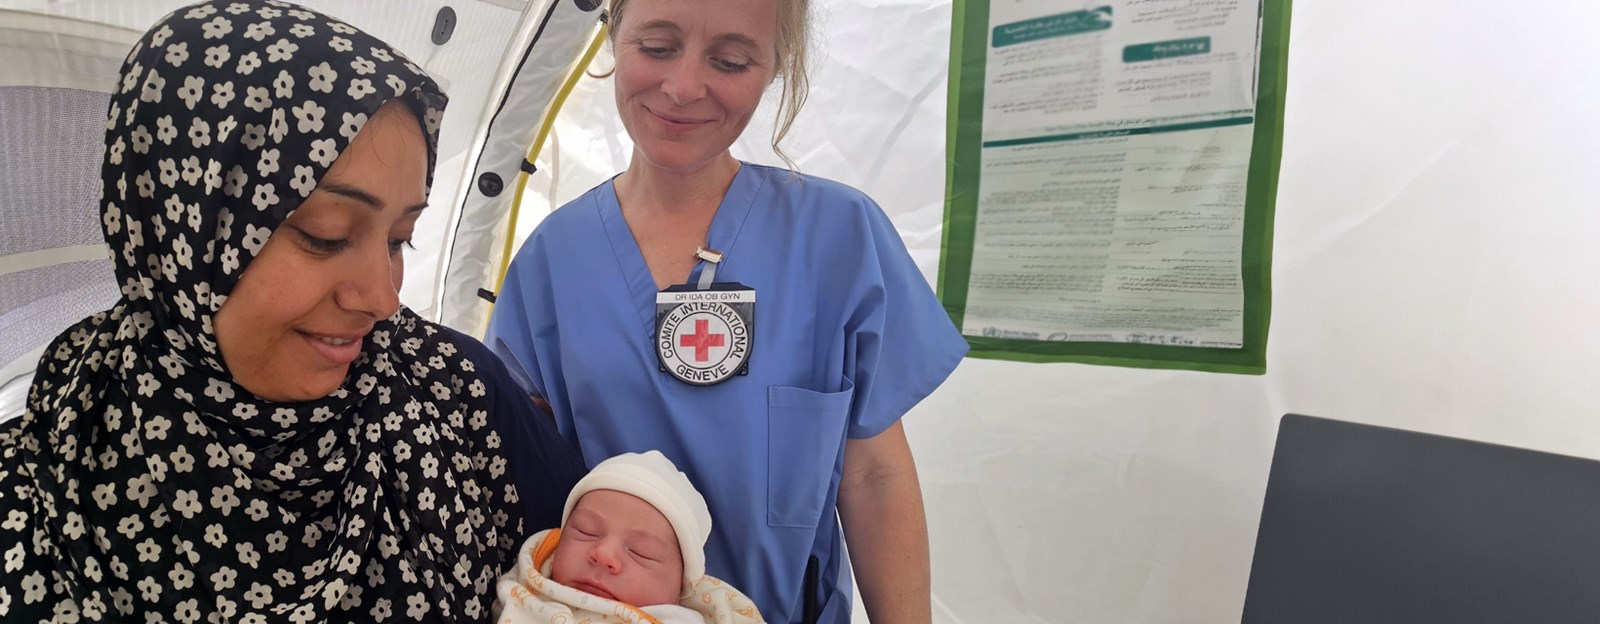 Gynekologen Ida , står sammen med en mamma som holder en nyfødt baby i armene